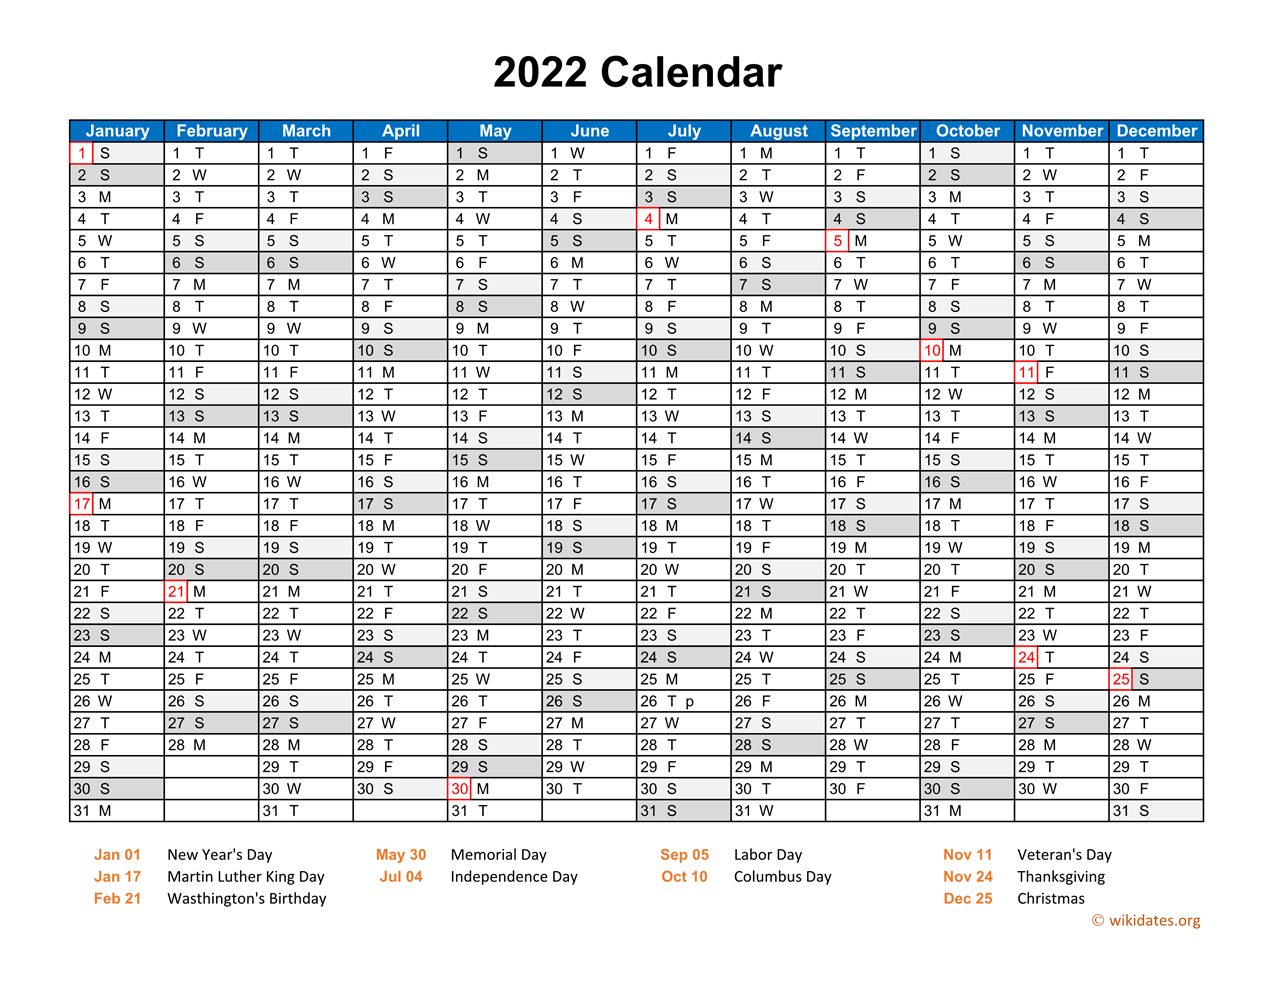 2022 Calendar Horizontal, One Page | Wikidates